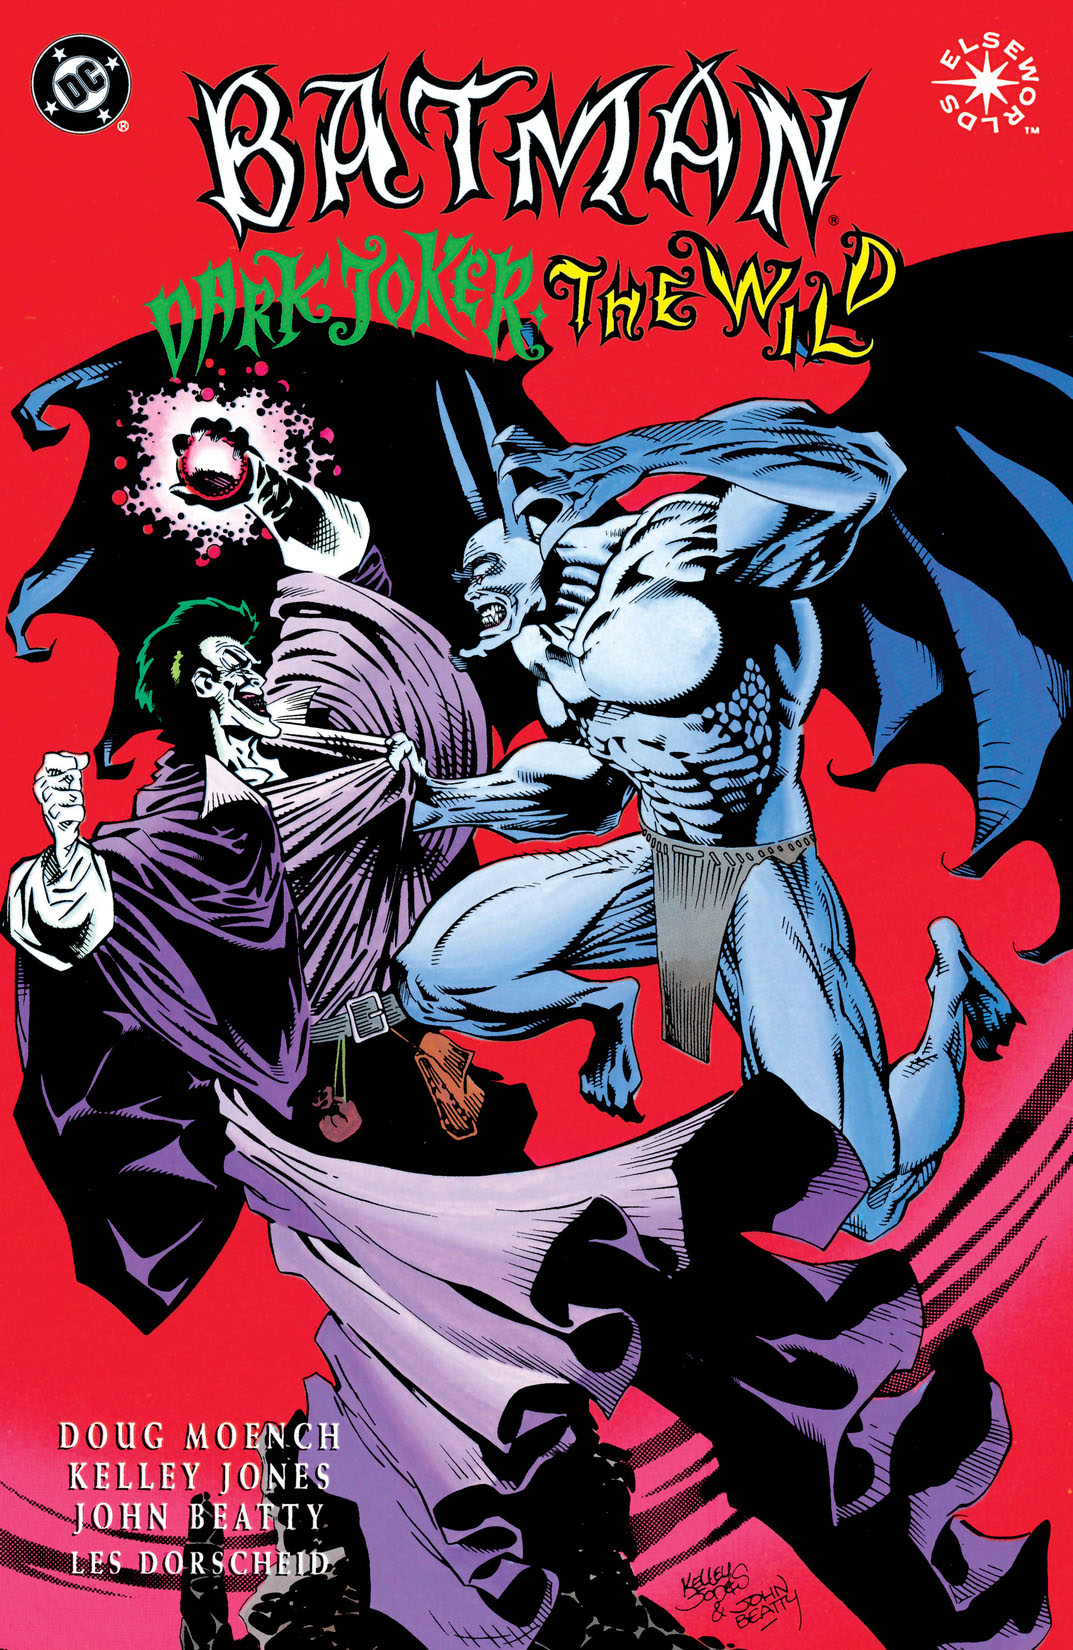 Batman: Dark Joker - The Wild #1 preview images